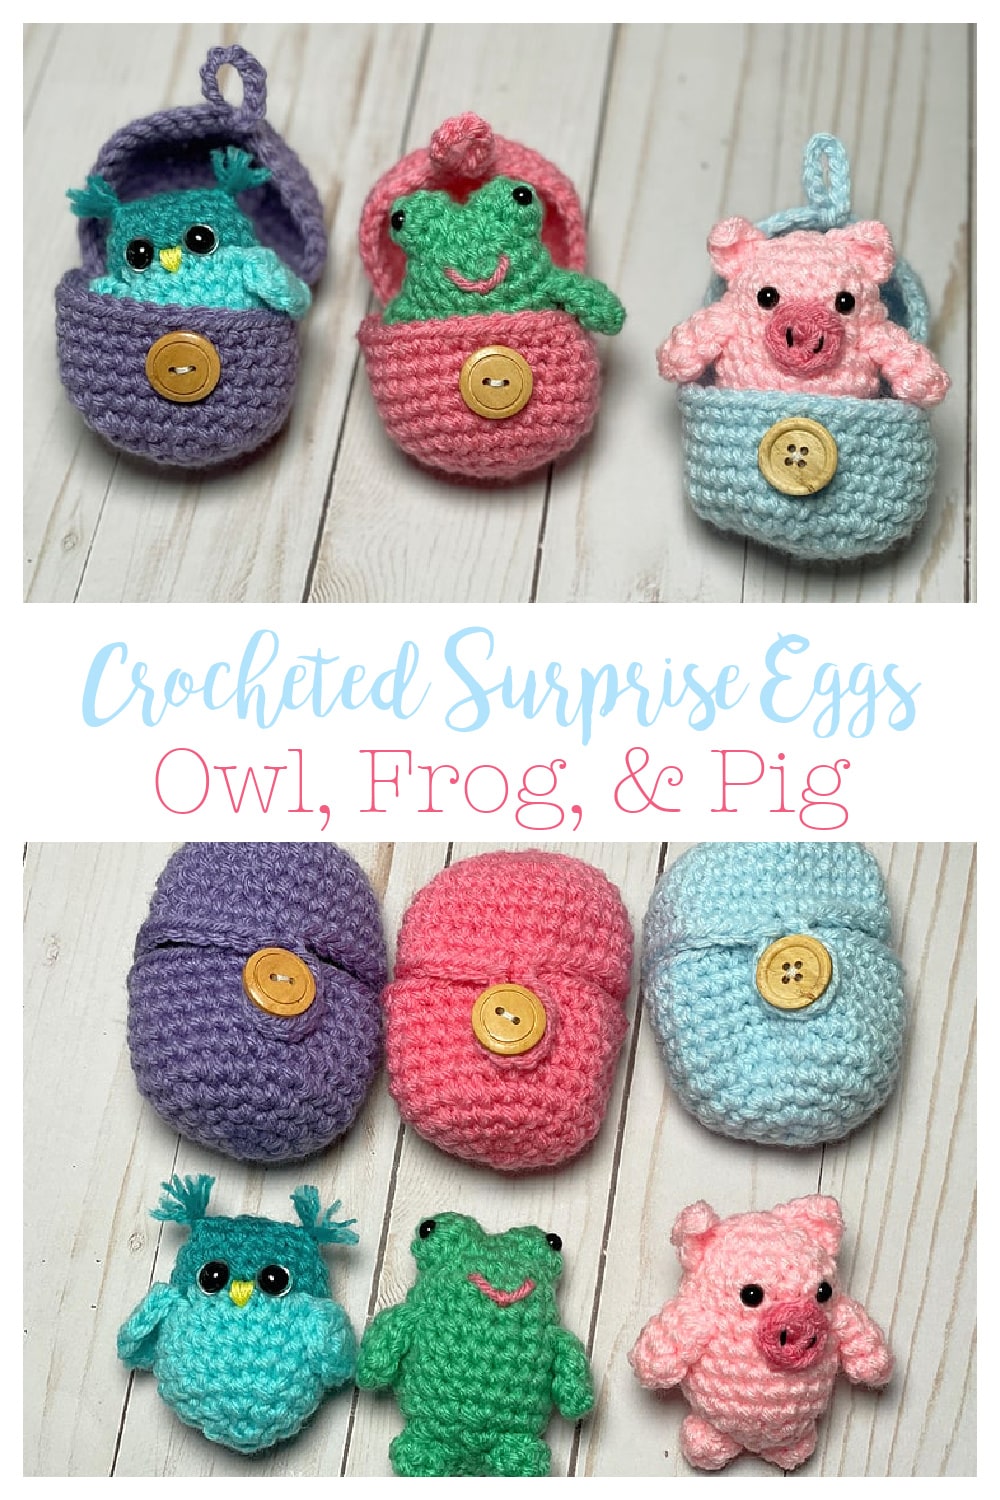 5 Little Monsters: More Crocheted Surprise Eggs